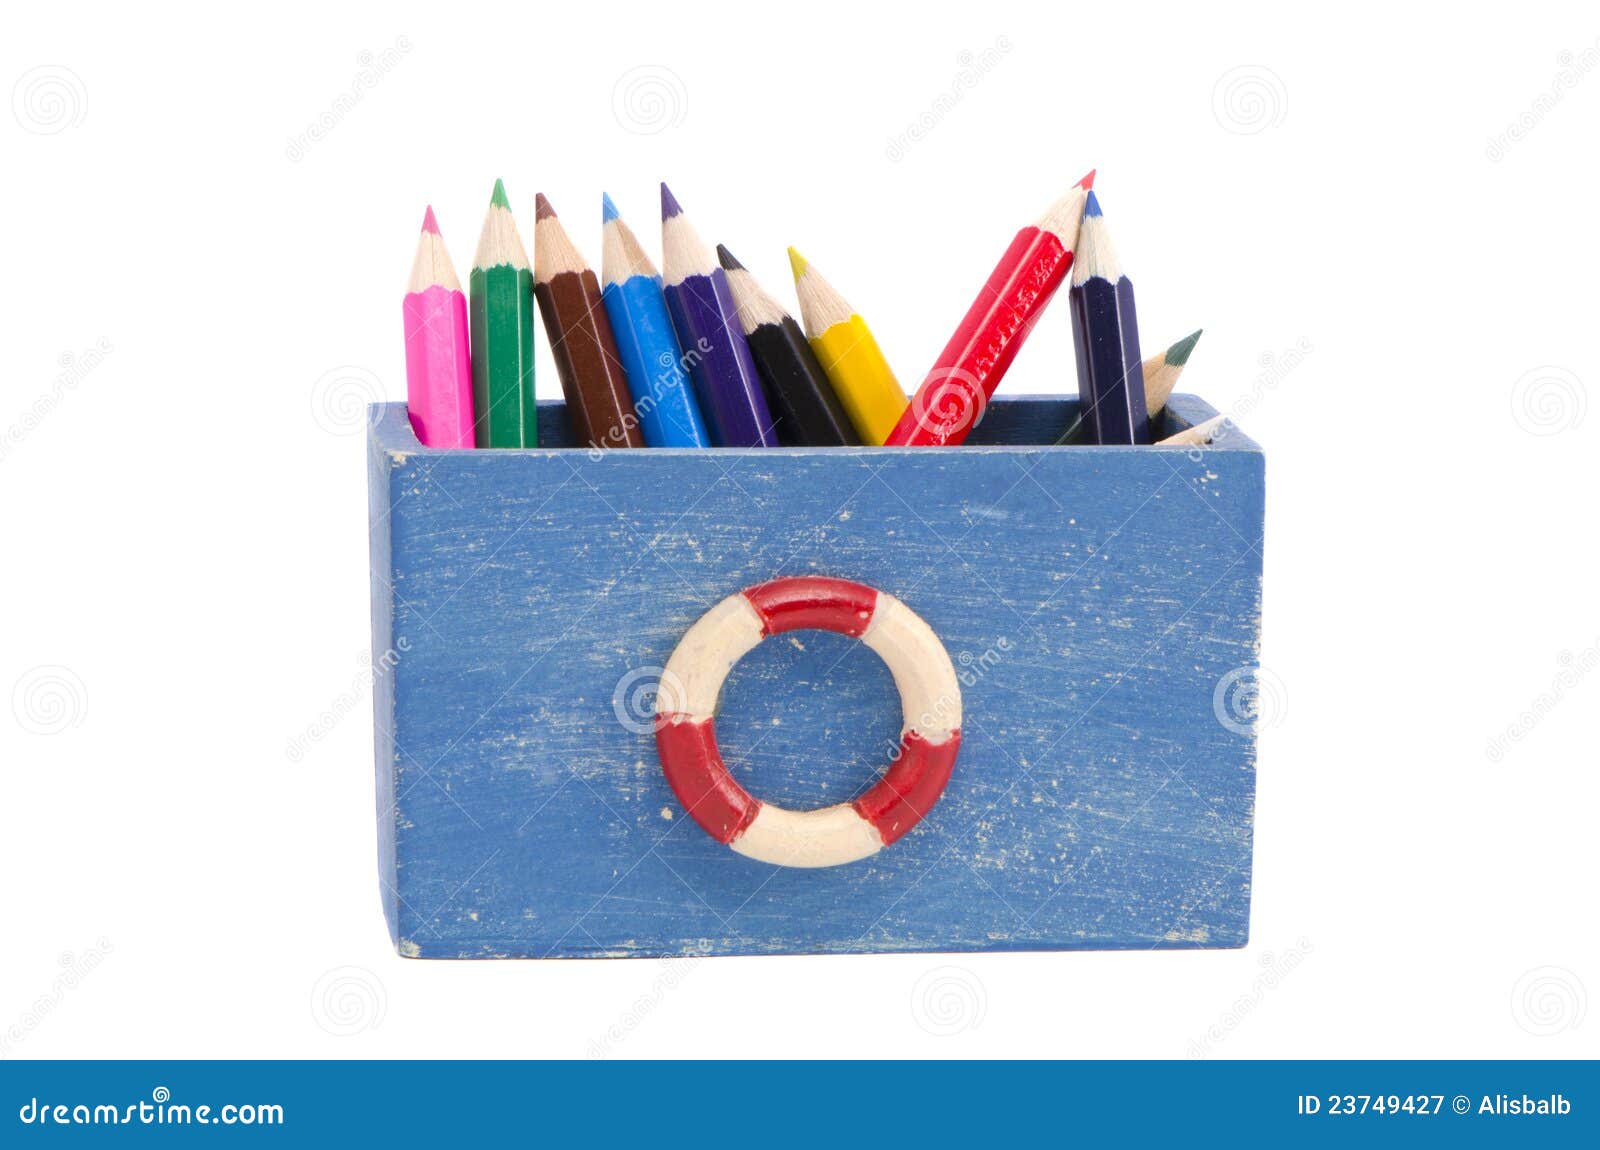 На столе лежат две коробки с карандашами. Карандаши в коробке. Коробка с карандашами. Коробка цветных карандашей. Коробка карандашей на белом фоне.